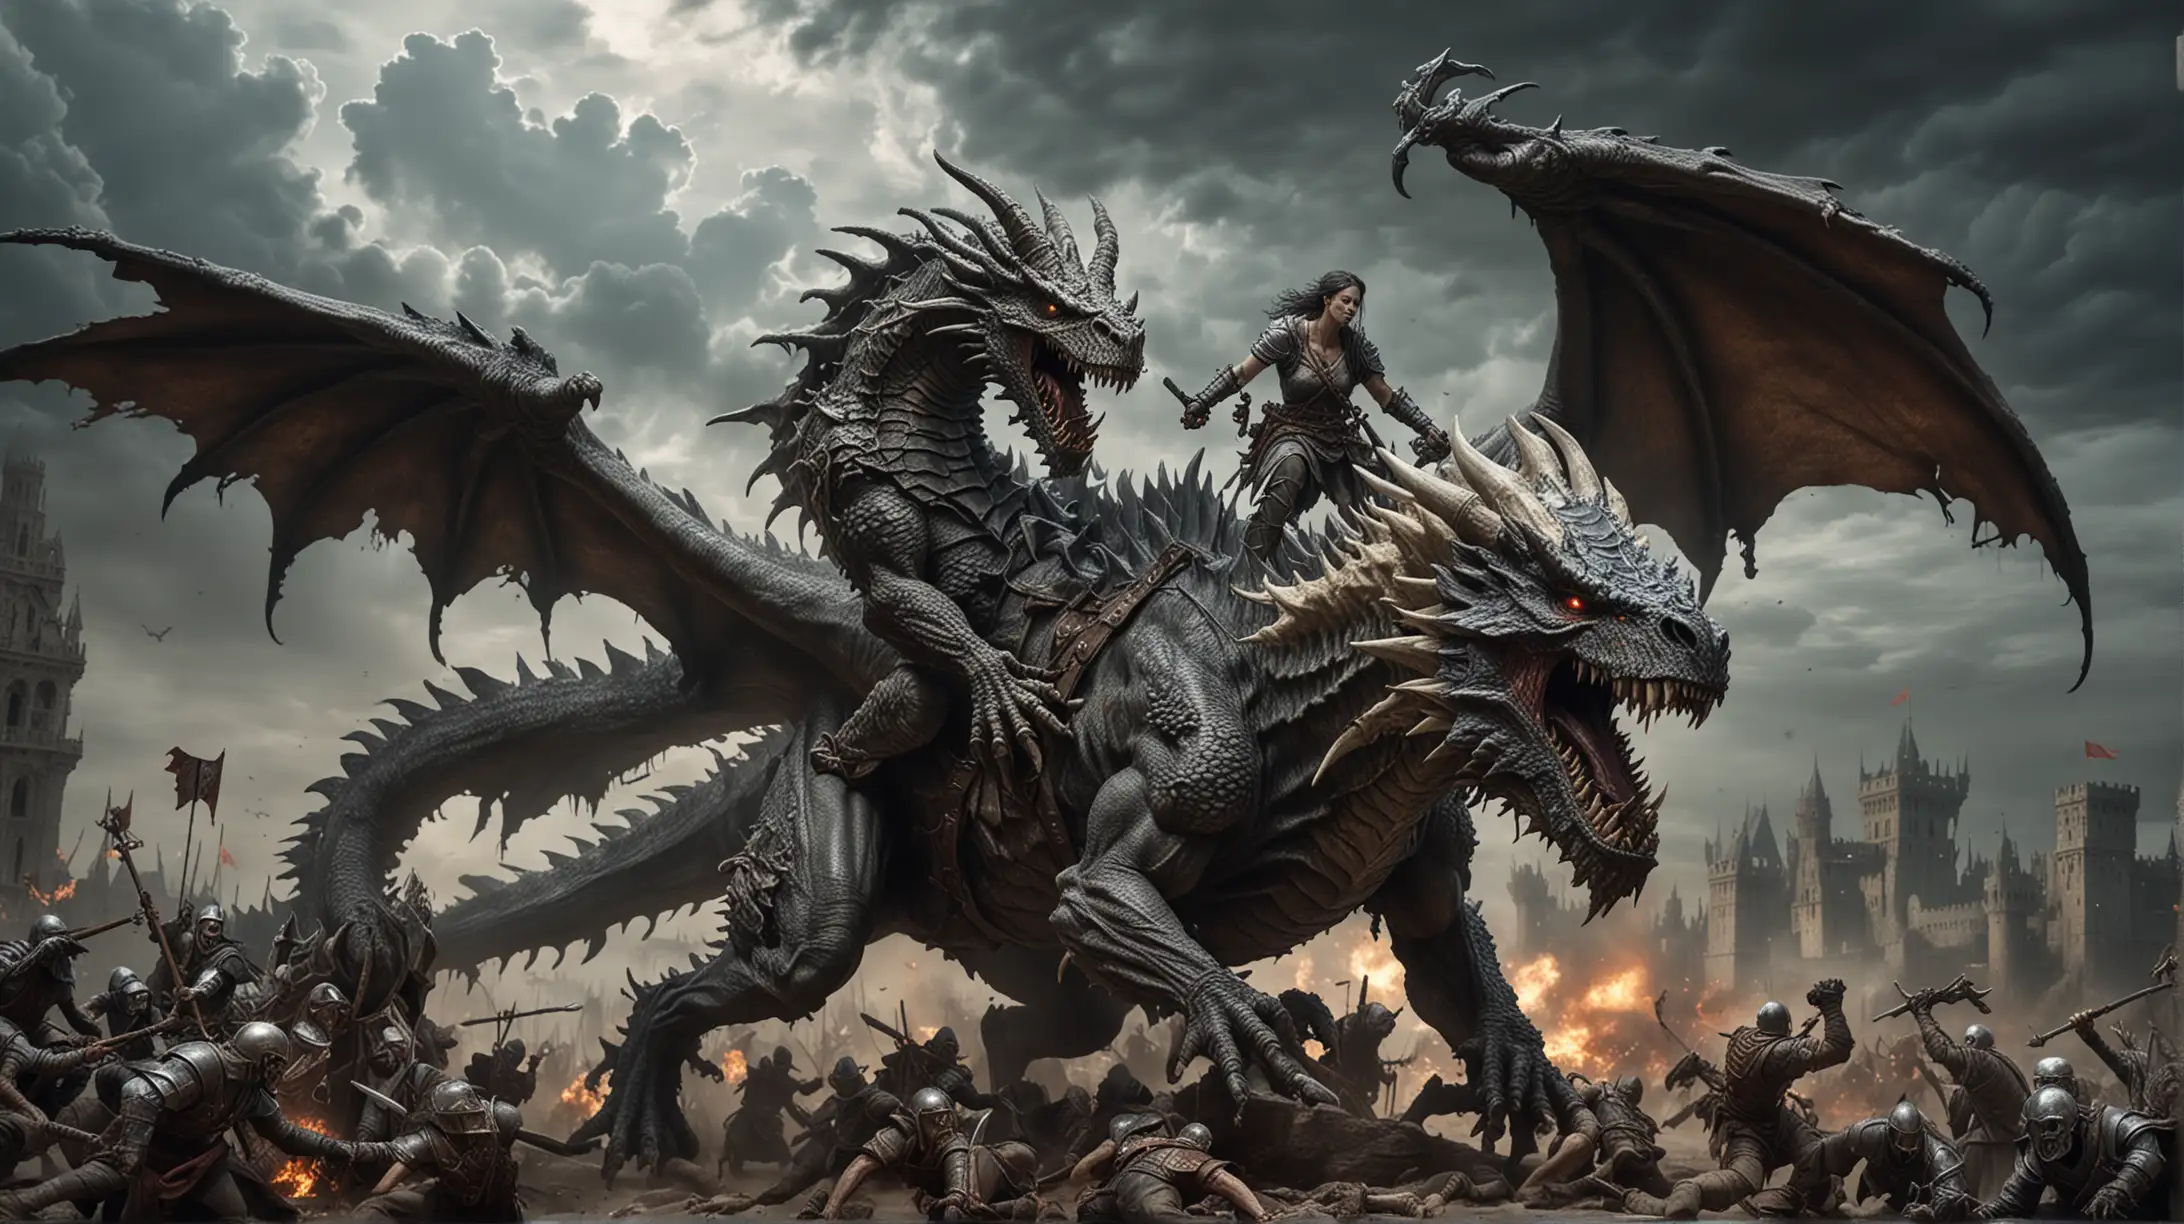 Medieval Battlefield Vile Bone Demon Riding Zombie Dragon in Dramatic Storm